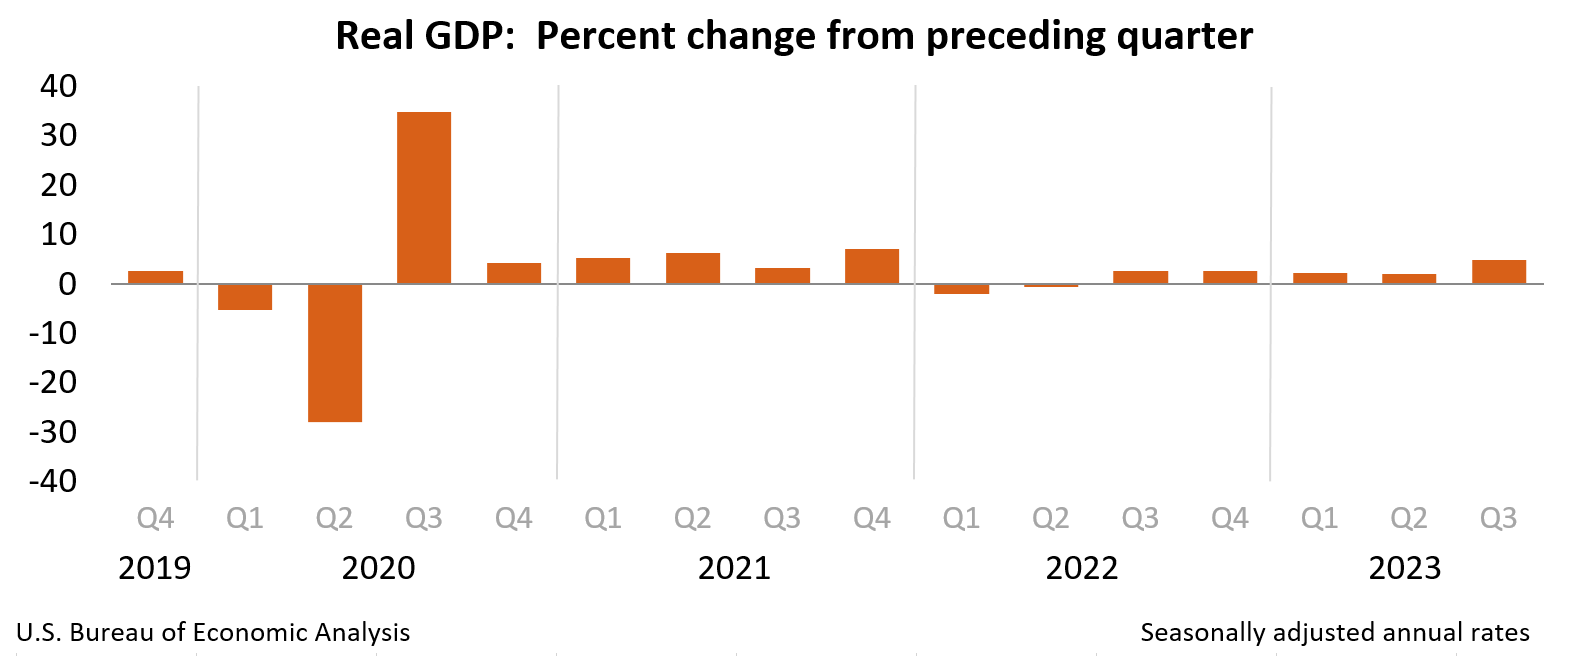 GDP Growth.